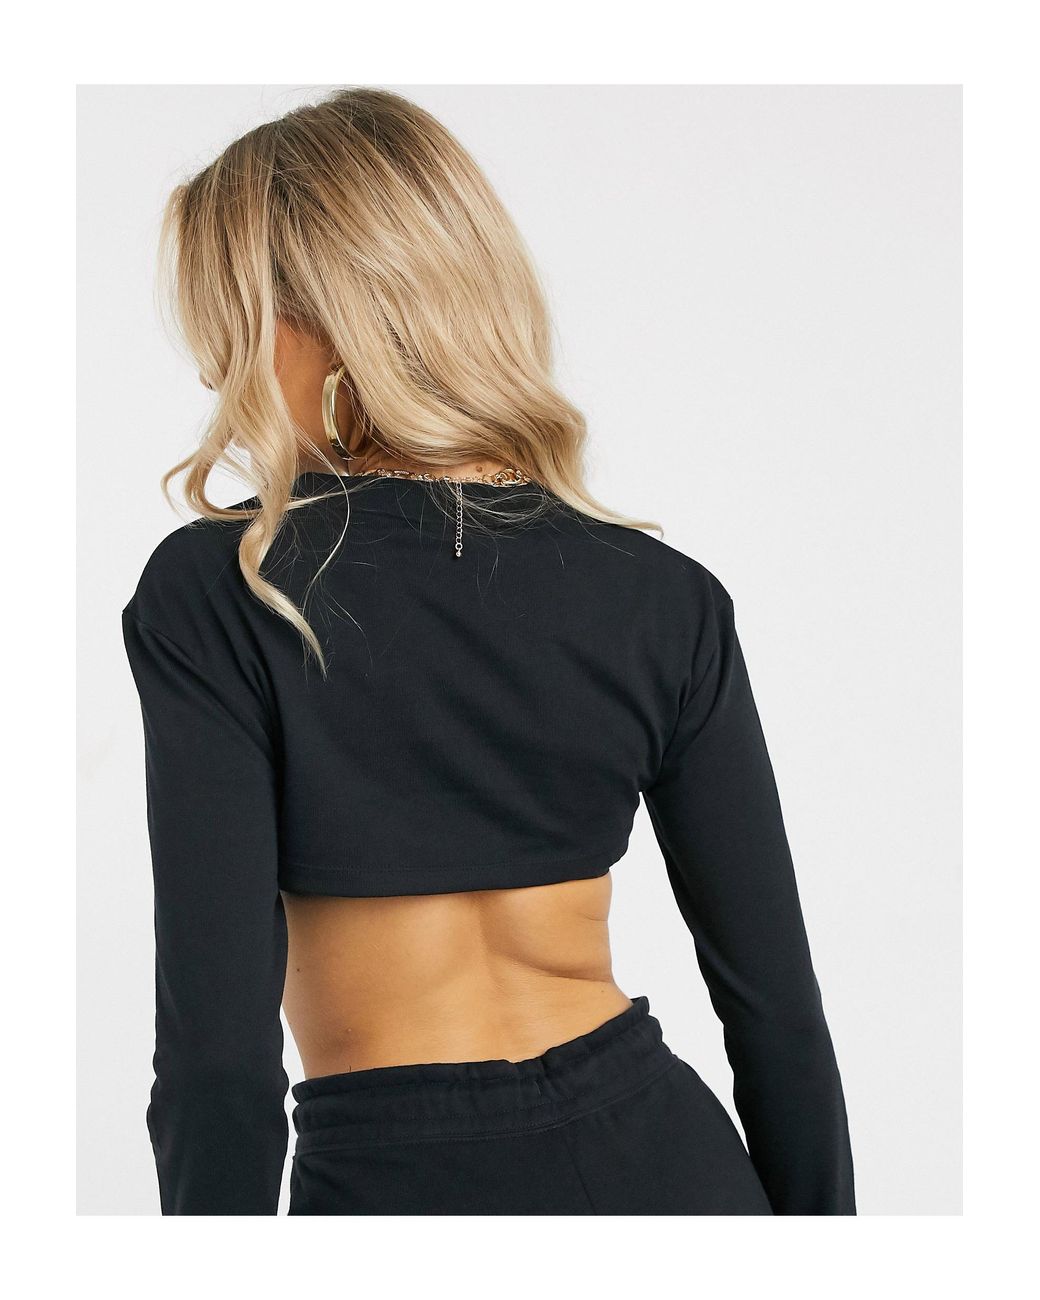 Nike Cotton Air Long Sleeve Black Super Crop Top | Lyst